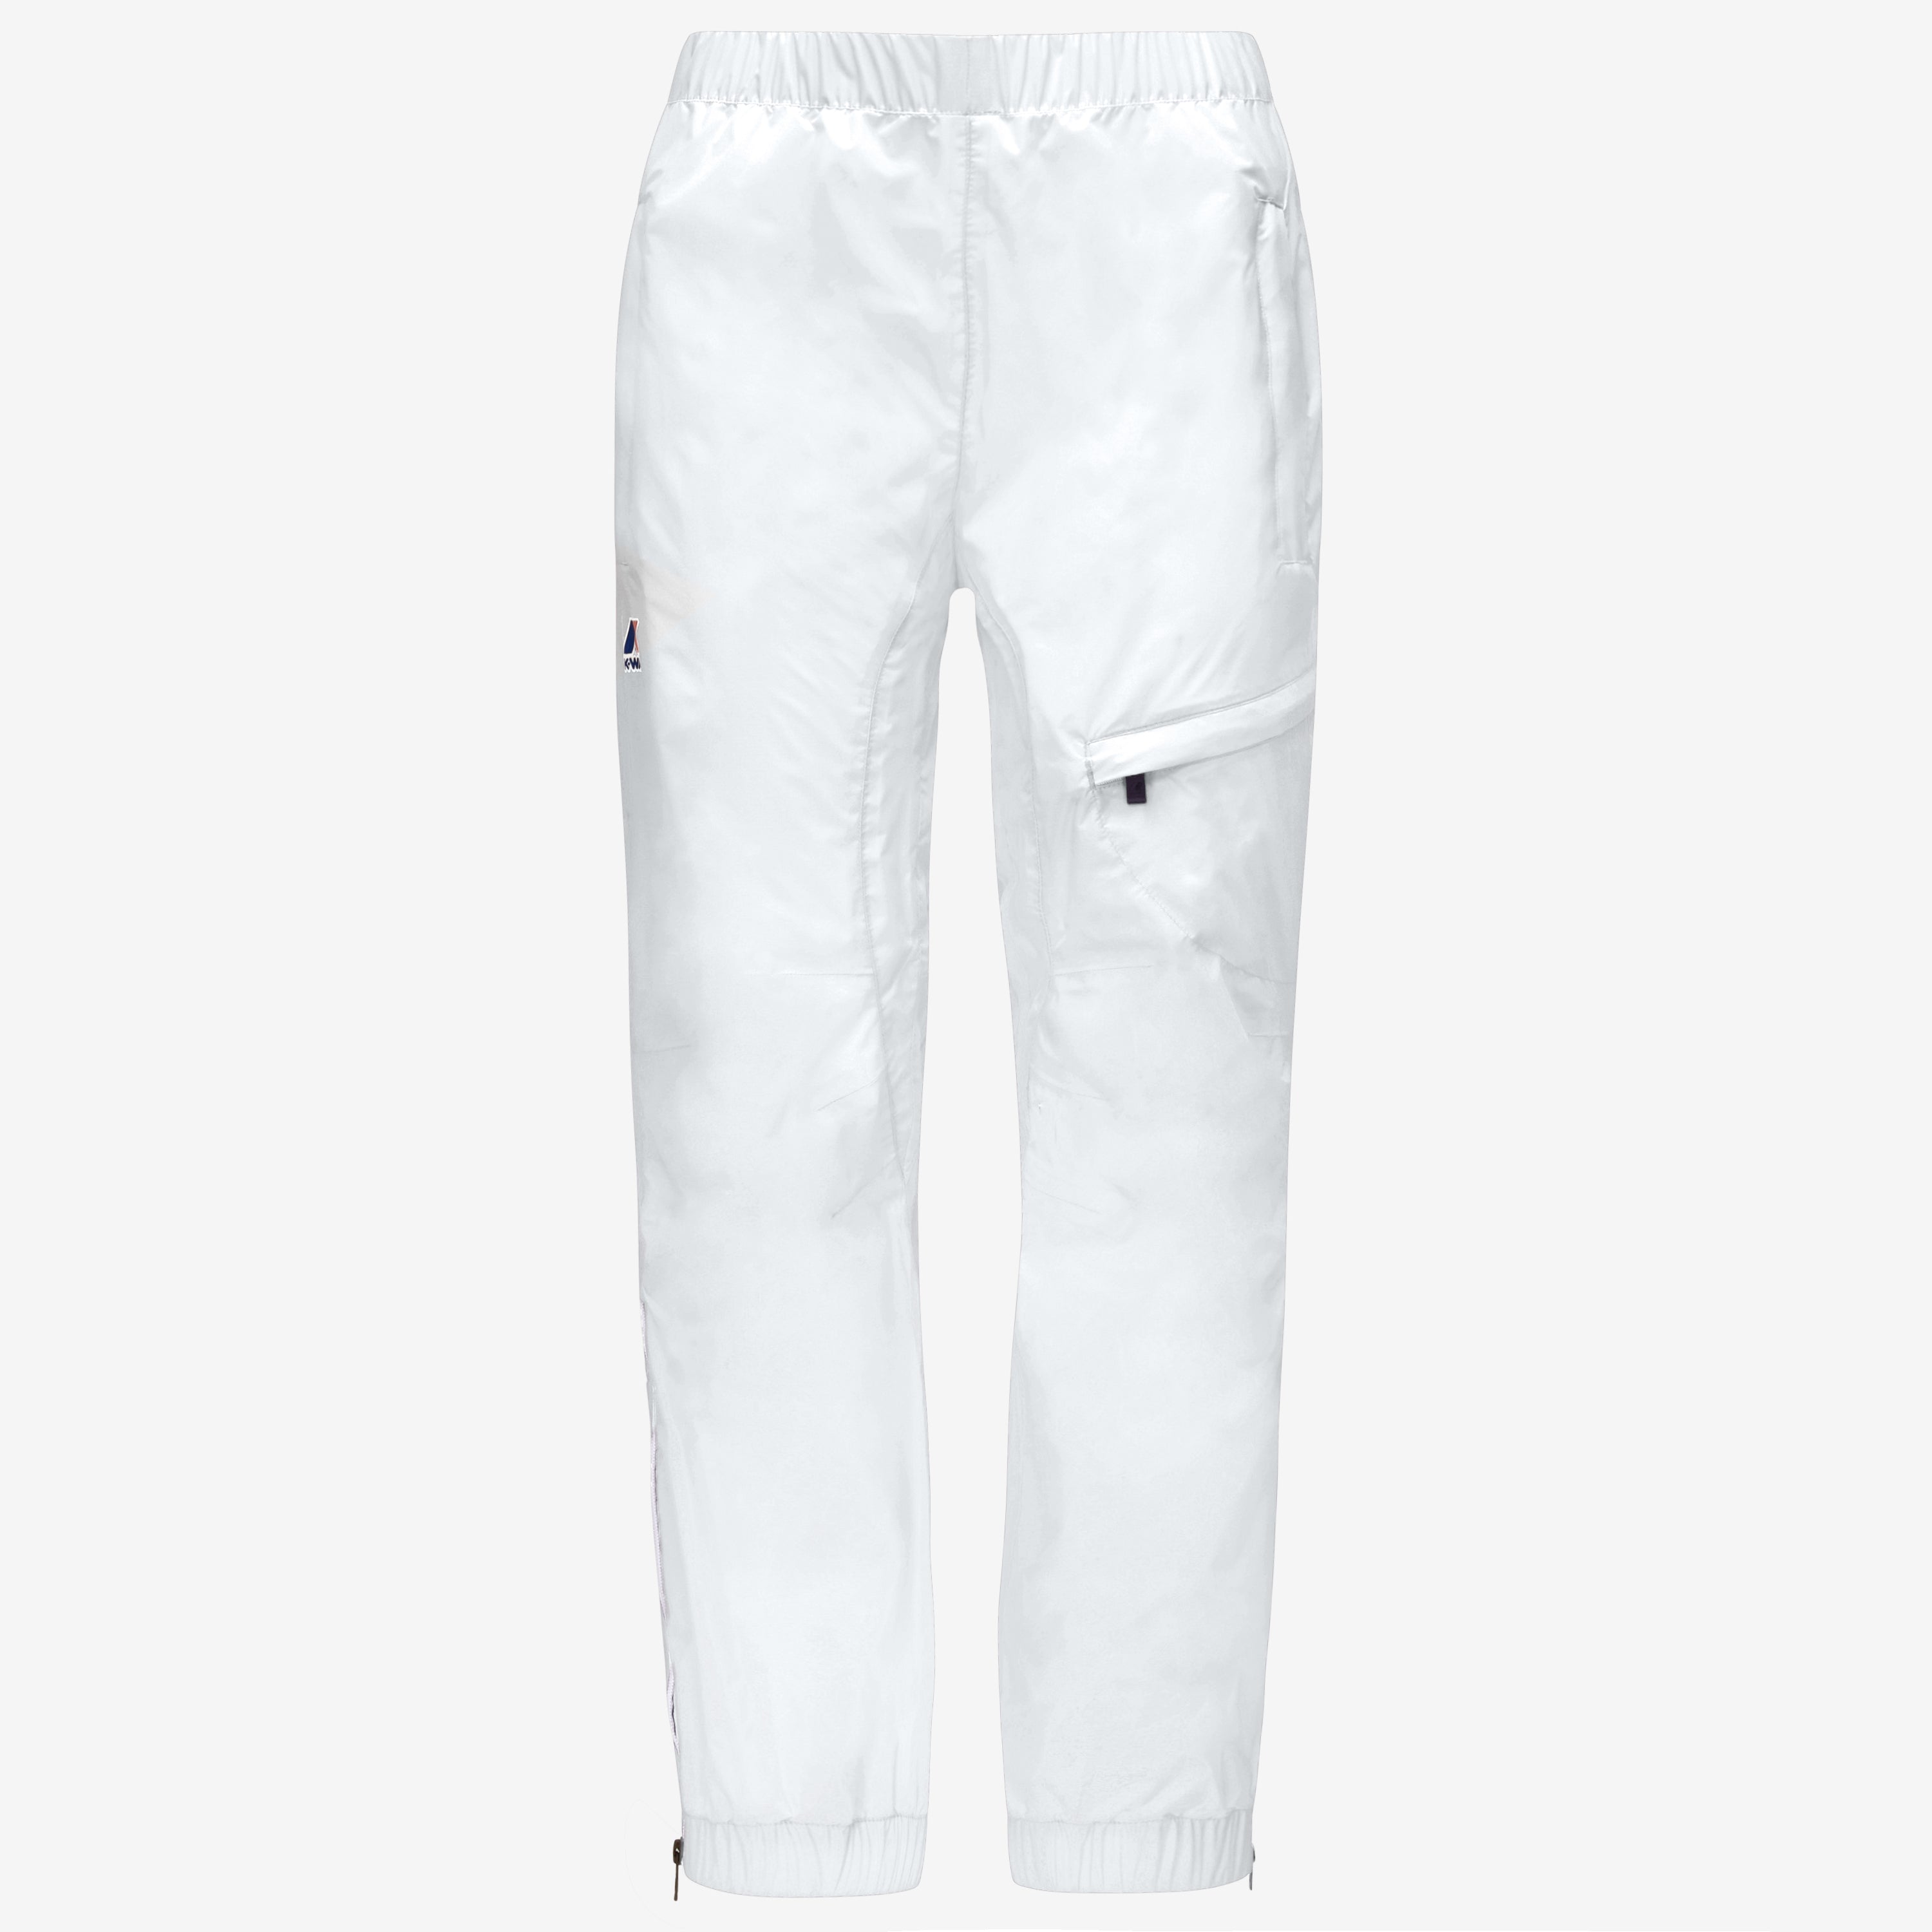 K-Way Edgard Blanc Pantalon imperméable pour enfants